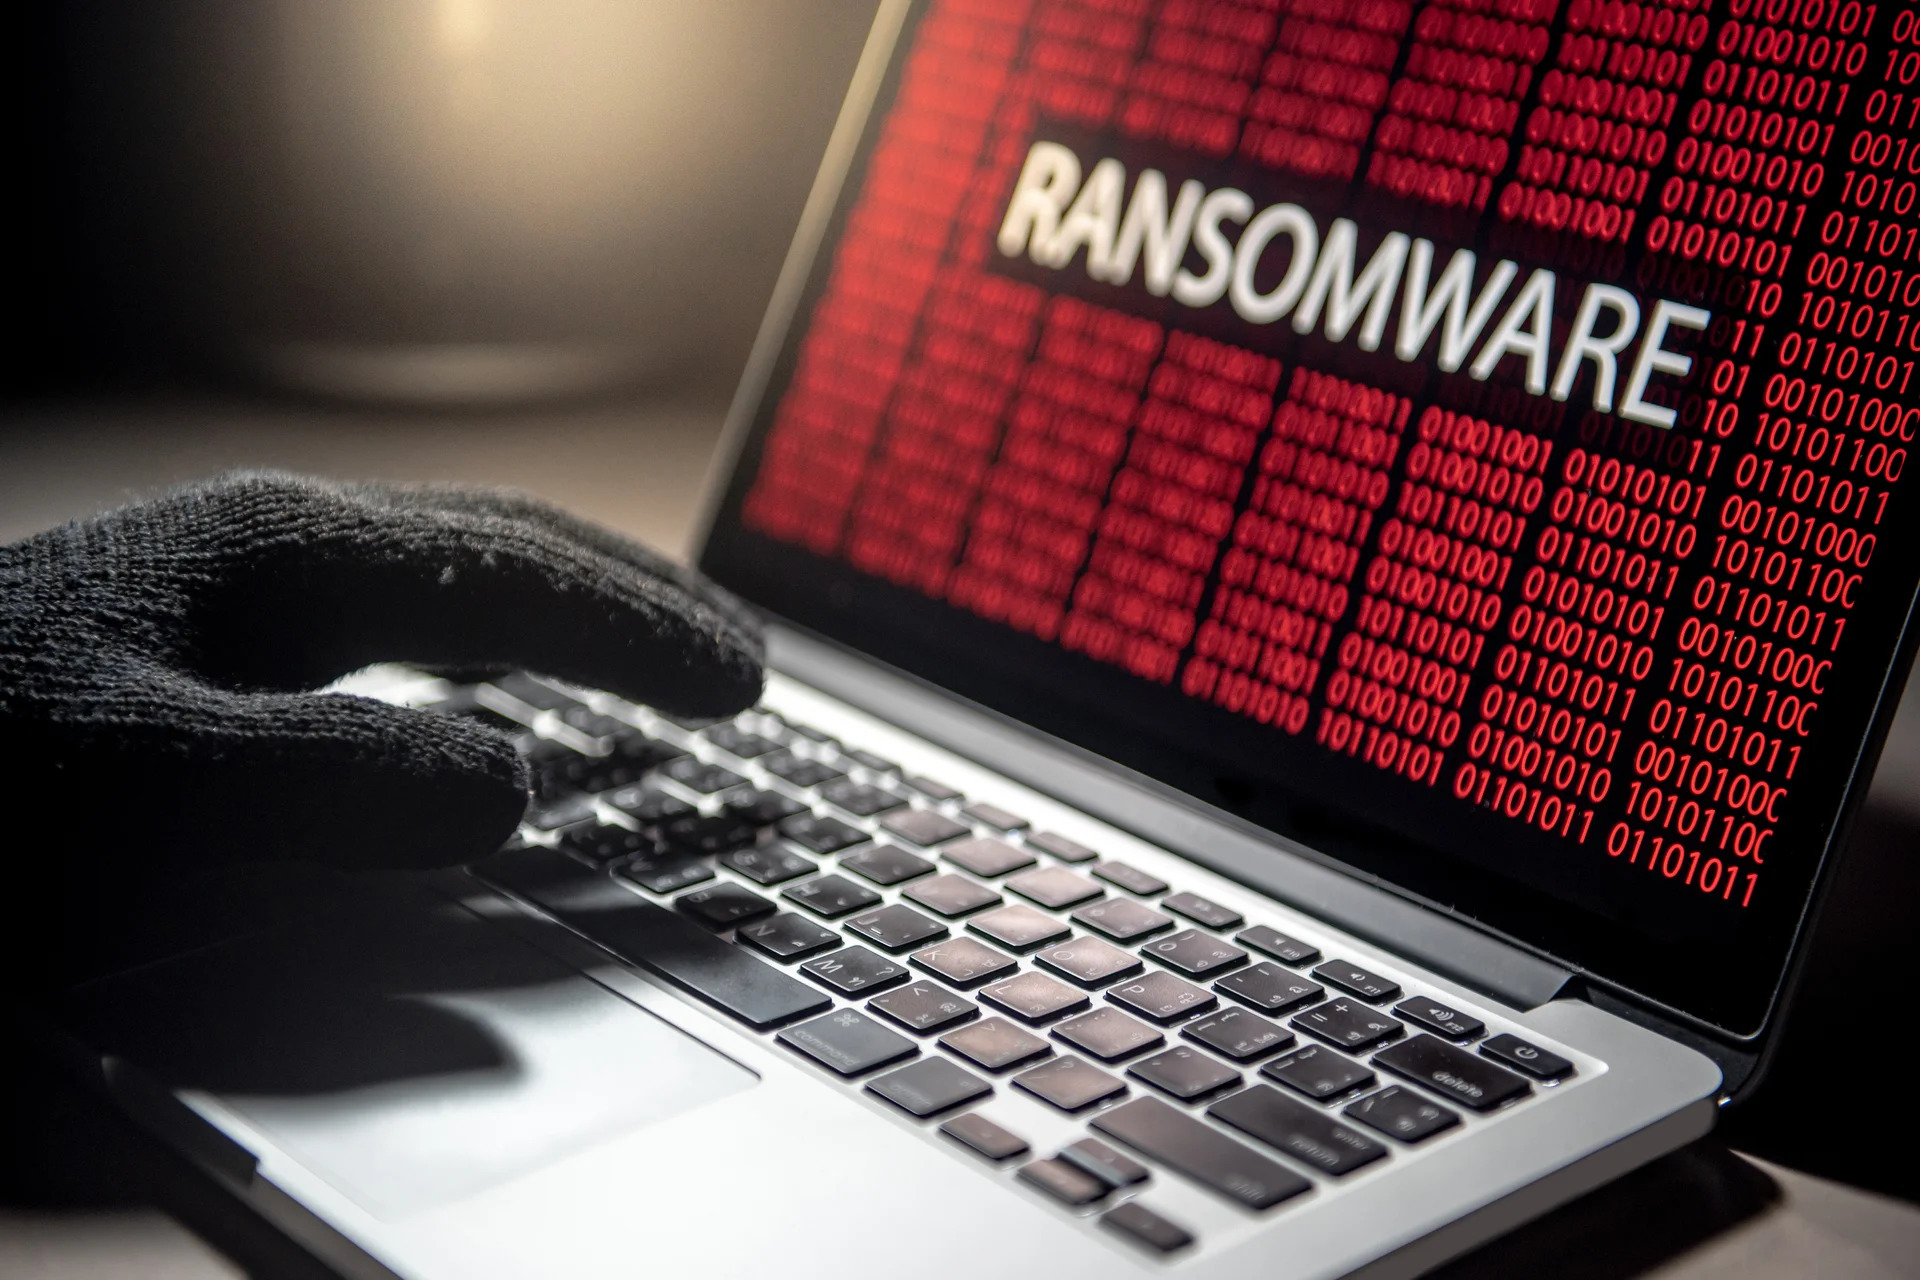 Expert Speak: Our Founder Amish Gandhi's blog on Ransomware